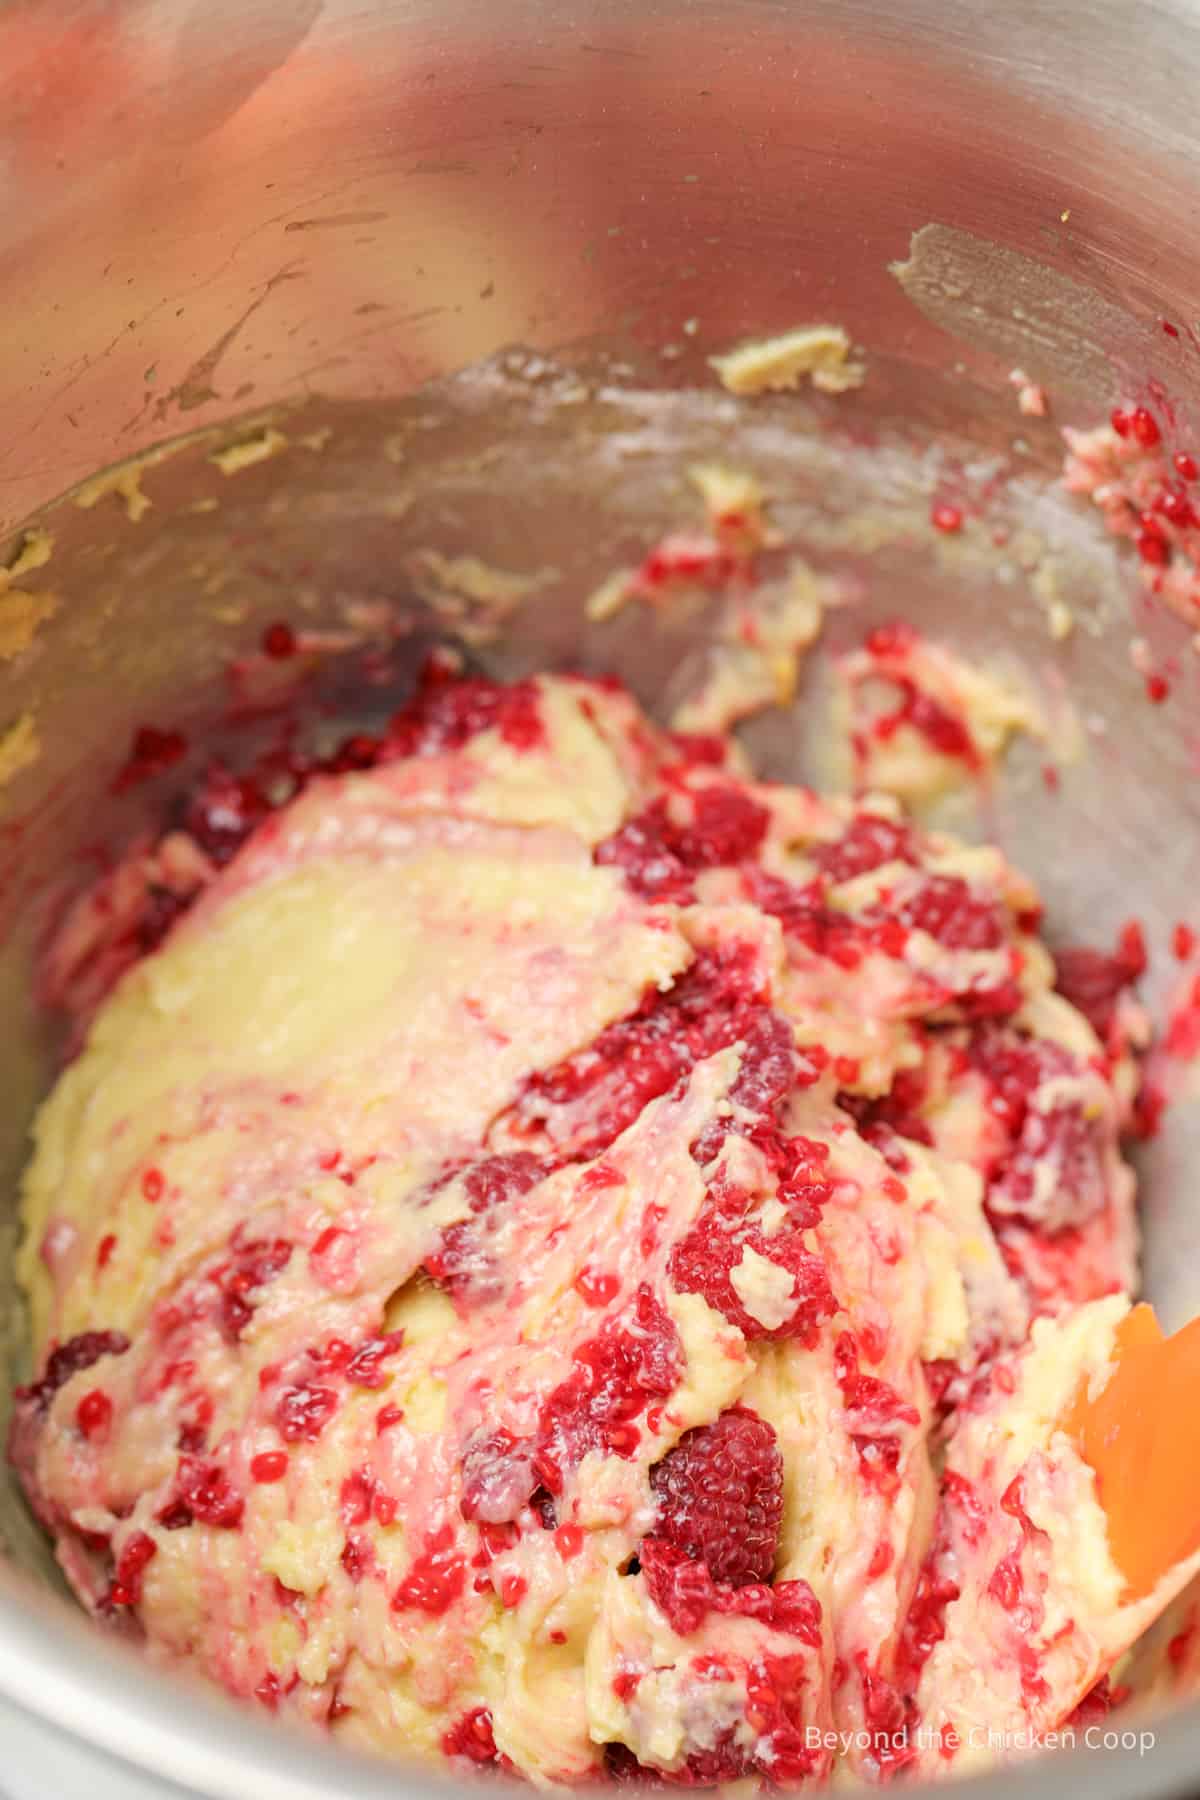 Raspberries in bread dough.